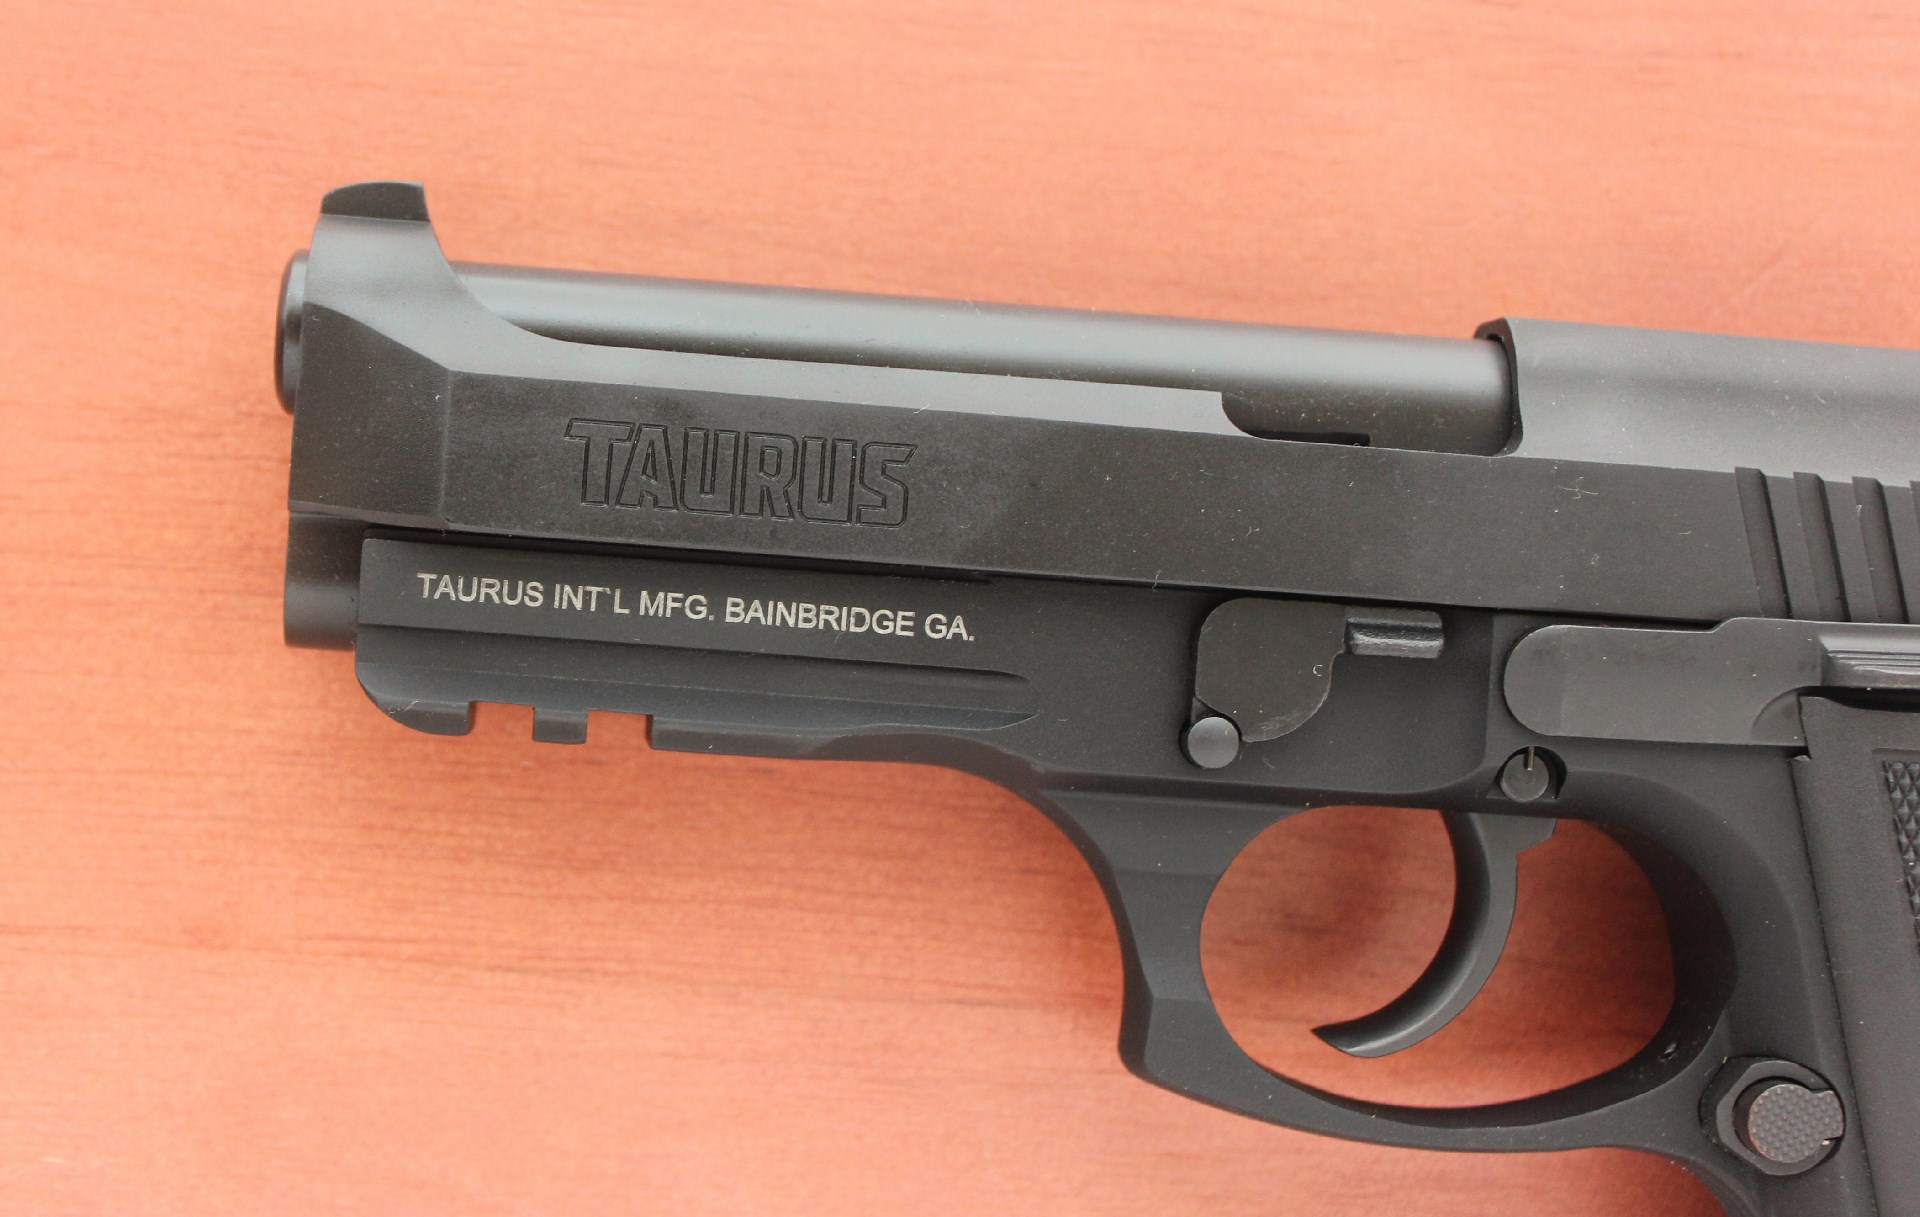 Taurus 917c pistol slide muzzle black gun closeup stamping company name